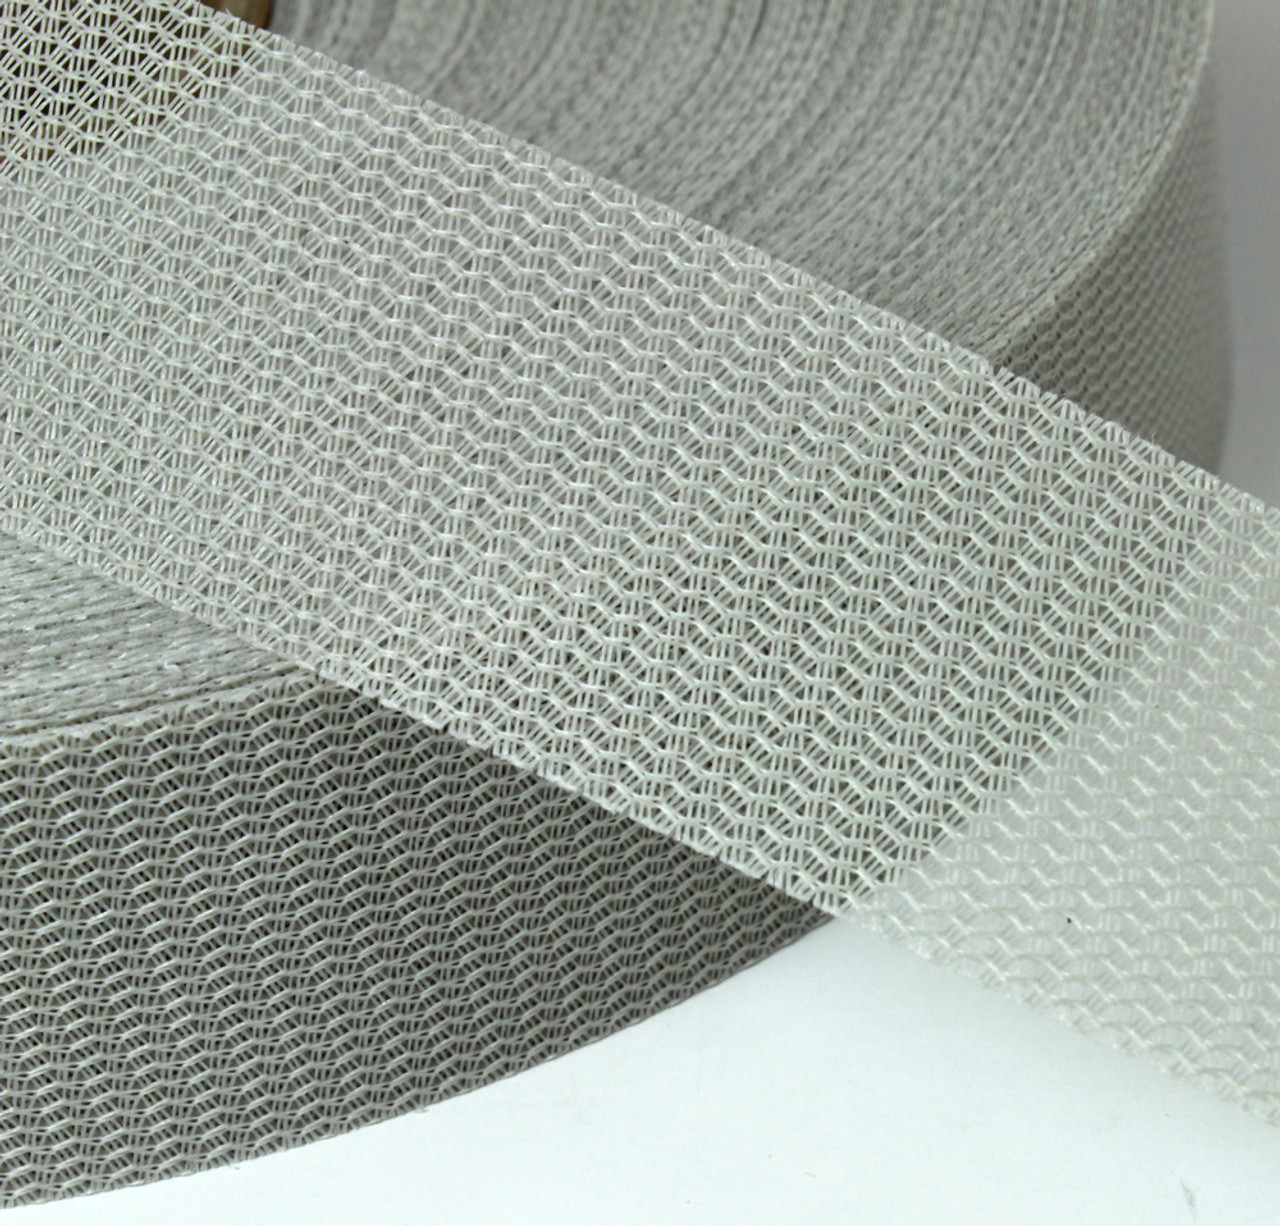 Upholstery Supplies - ACB2311 Auto Carpet Binding, #311 Dark Grey, 3/4  wide, two edge turned (PER YARD)